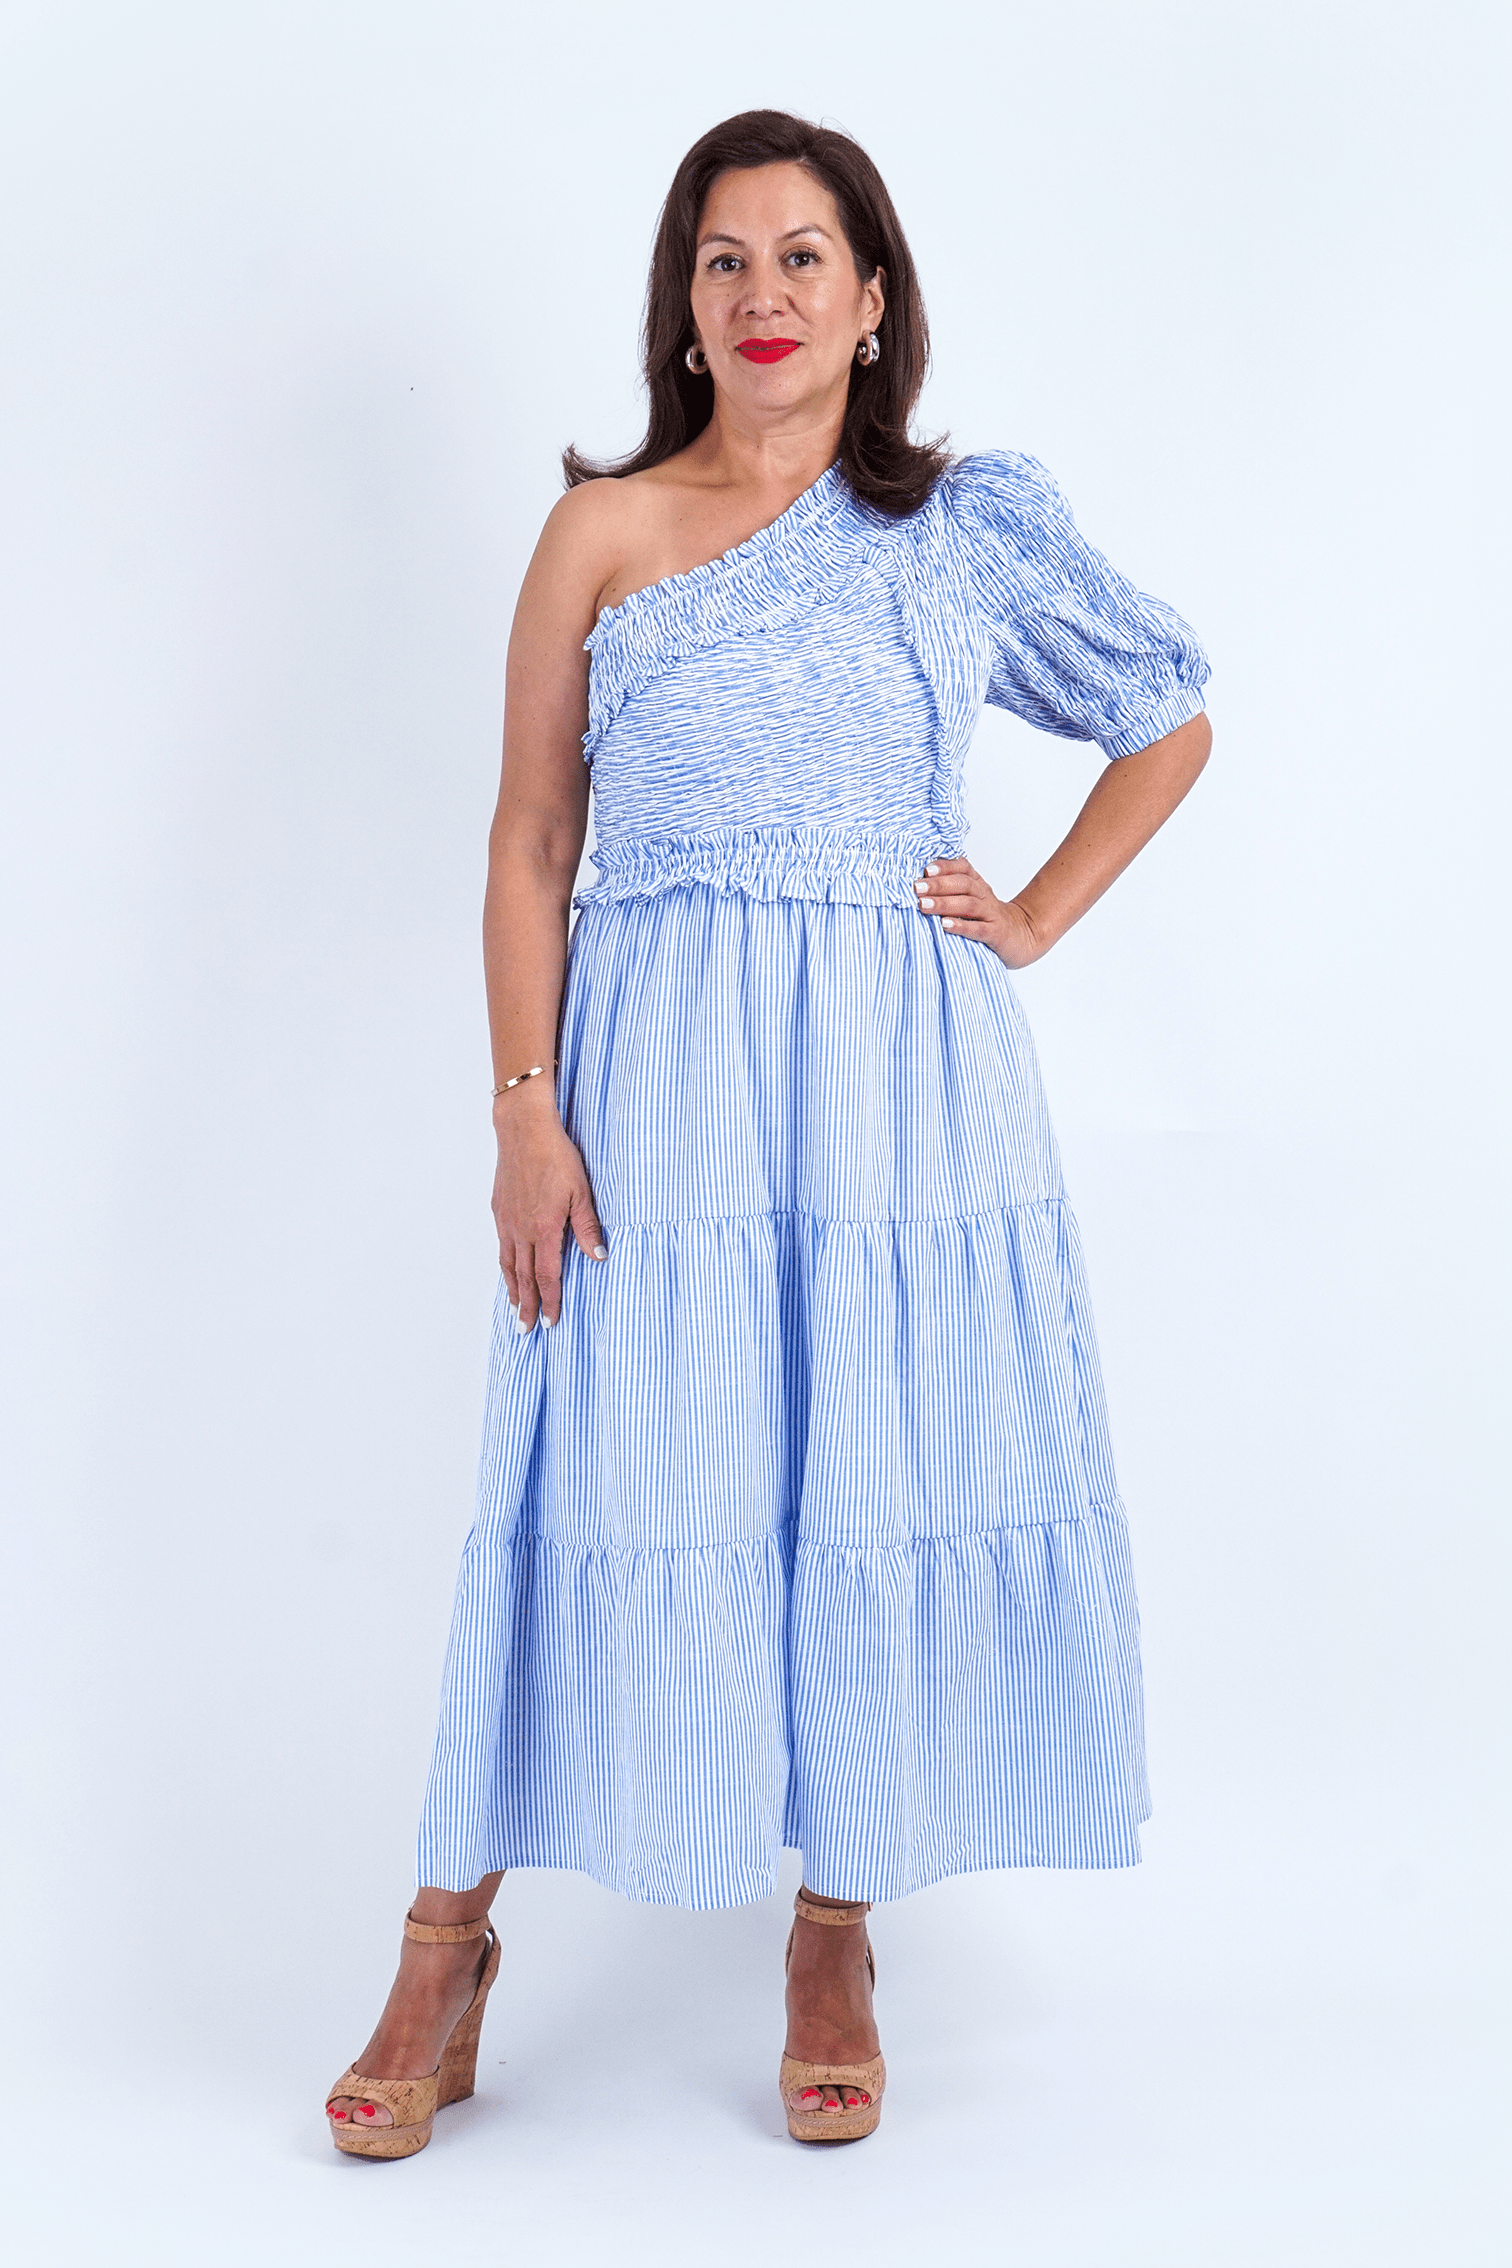 Chloe Dao Boutique DRESSES Blue Stripe Smocked One Shoulder Midi Dress